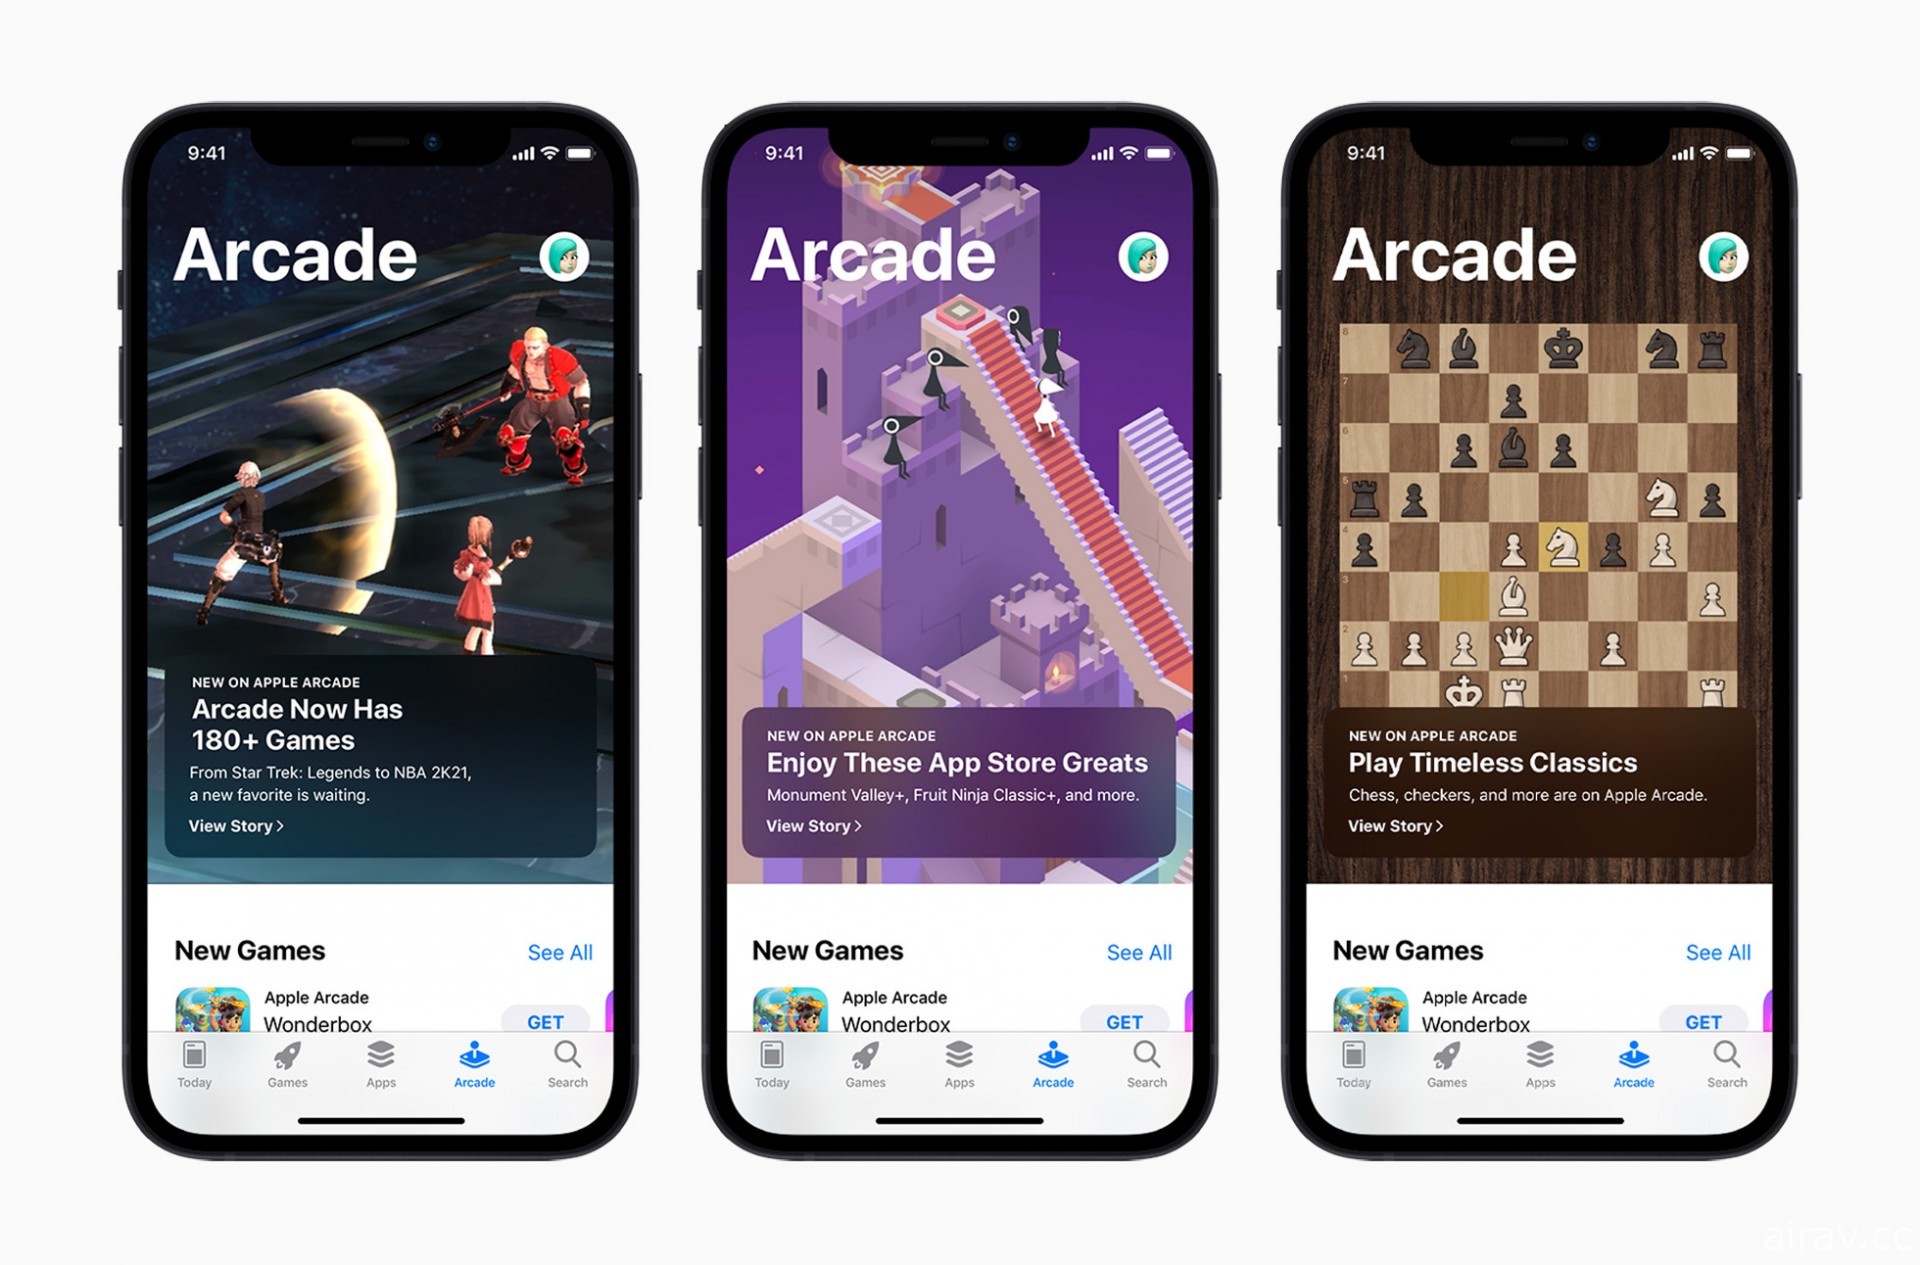 Apple Arcade 加入 30 多款新遊戲 包含《NBA 2K21 Arcade 版》《紀念碑谷》等作